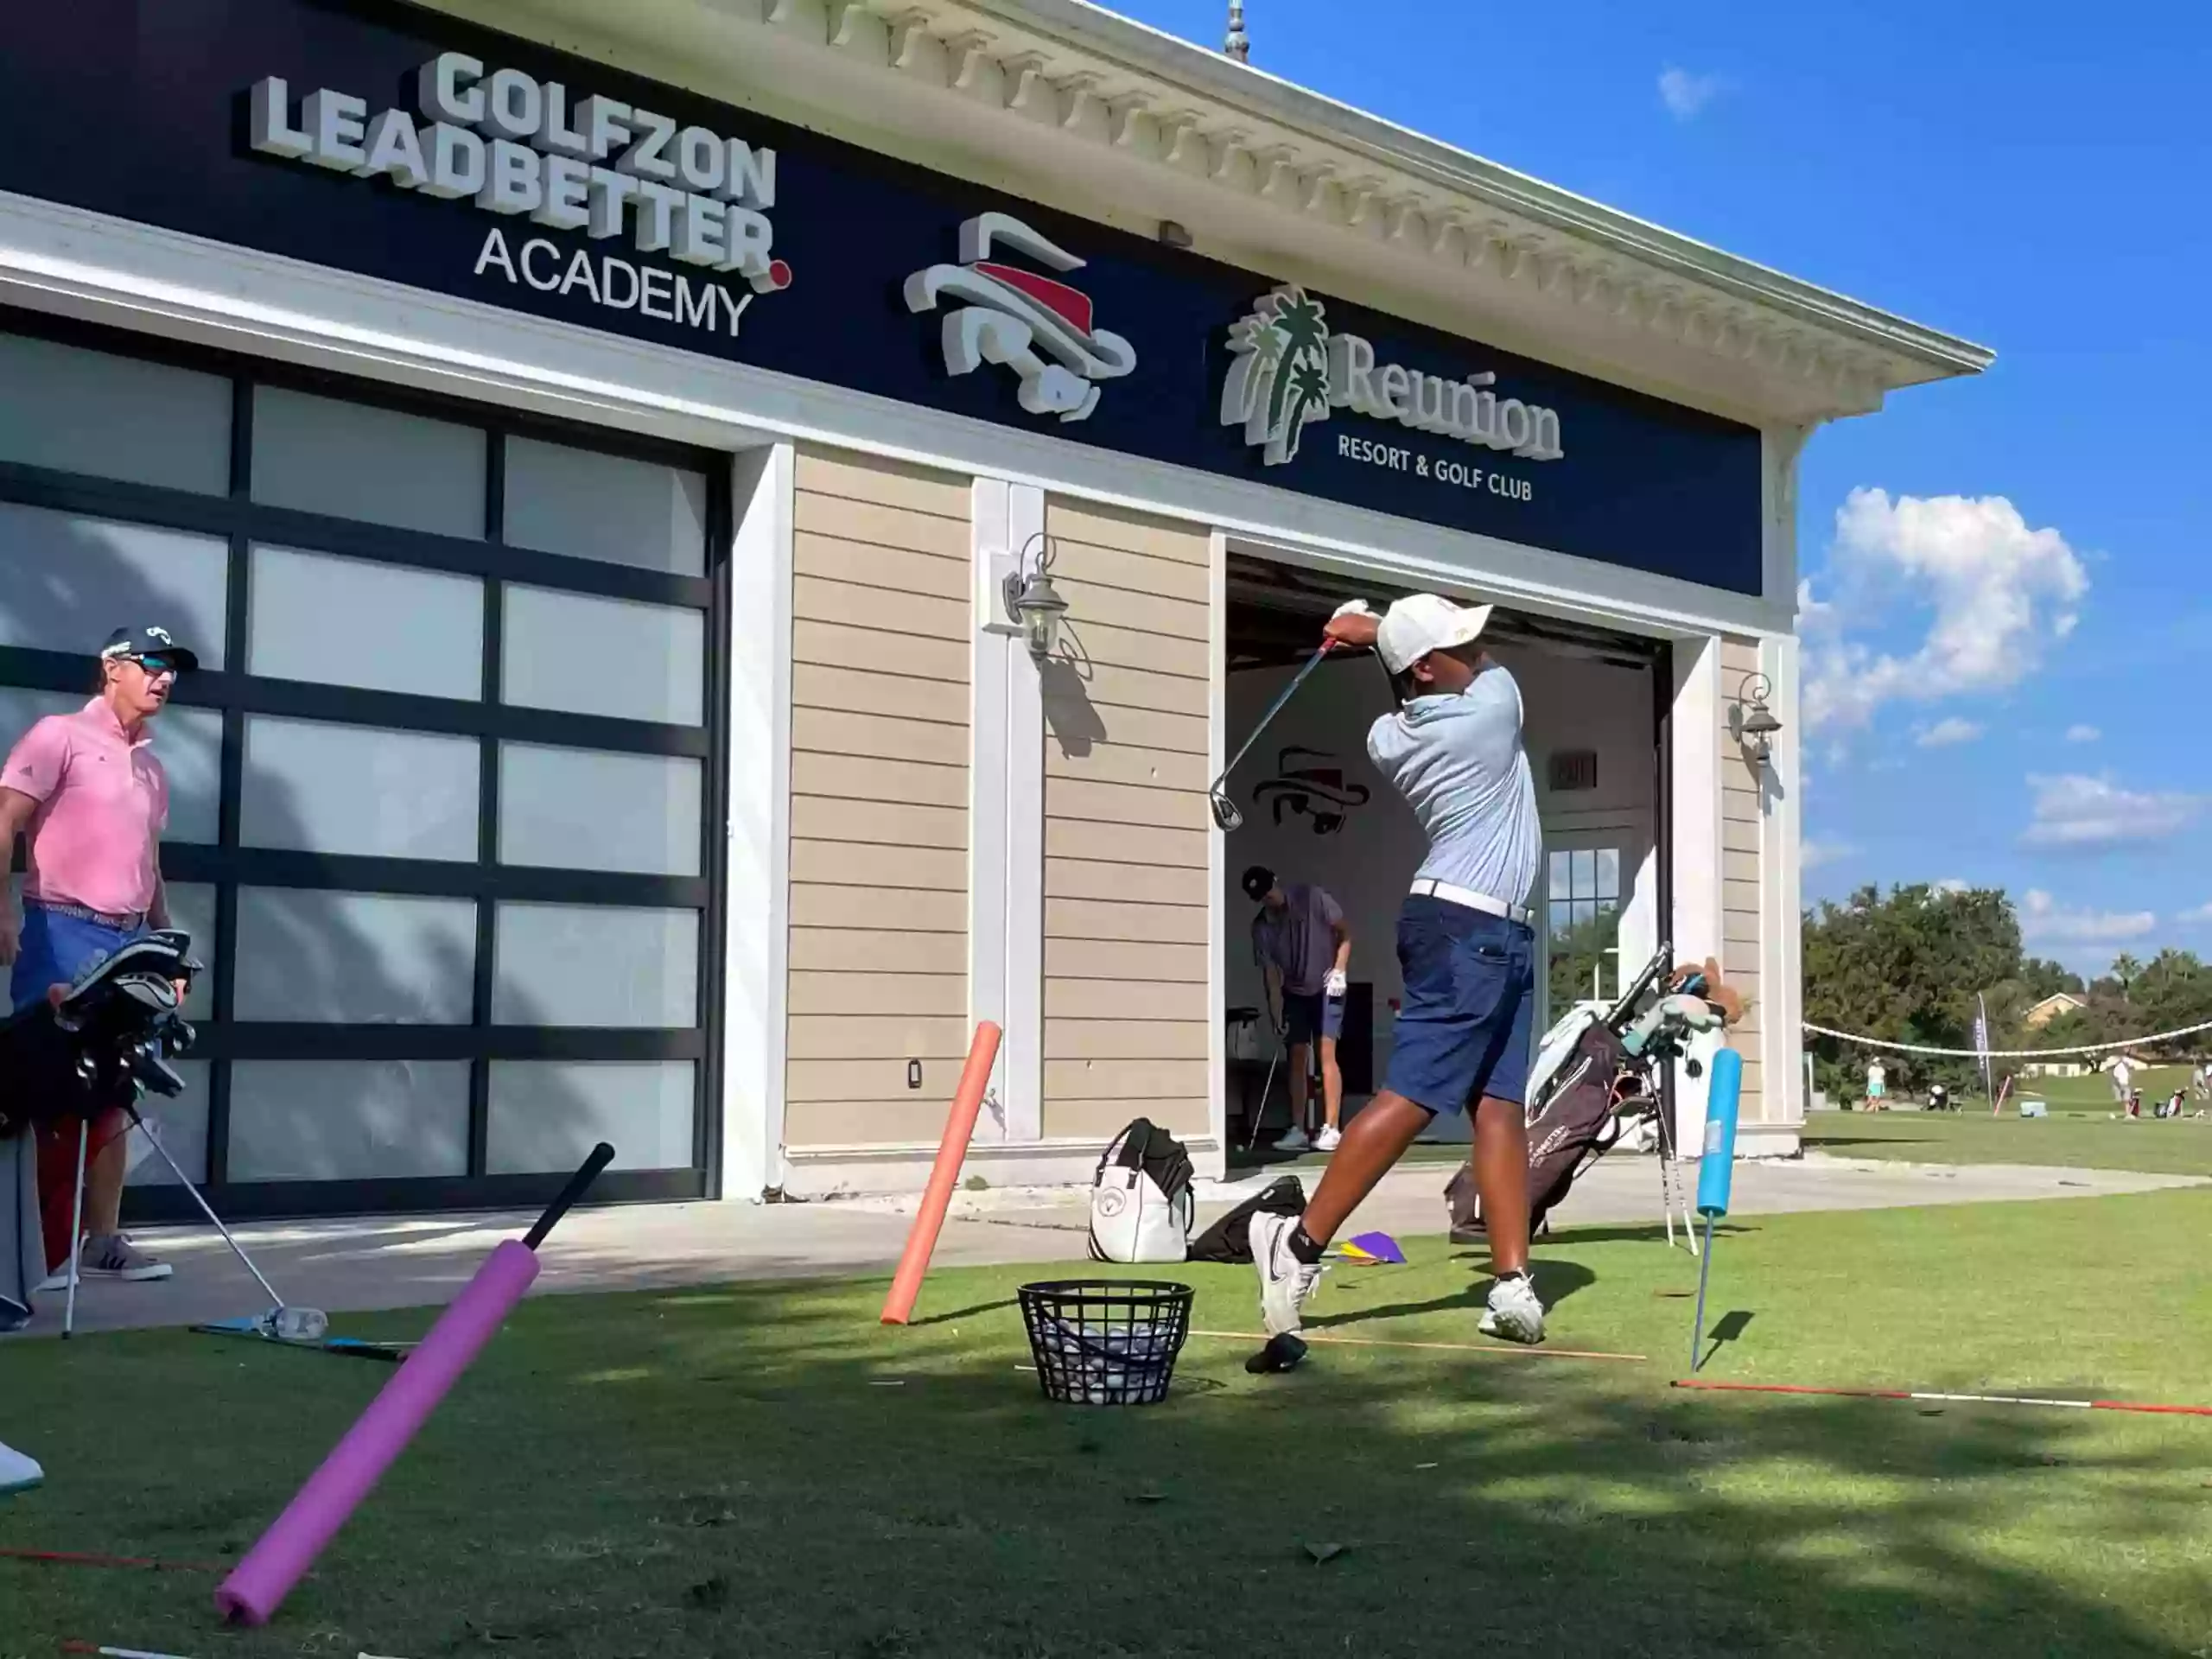 Golfzon Leadbetter Academy - World Headquarters at Reunion